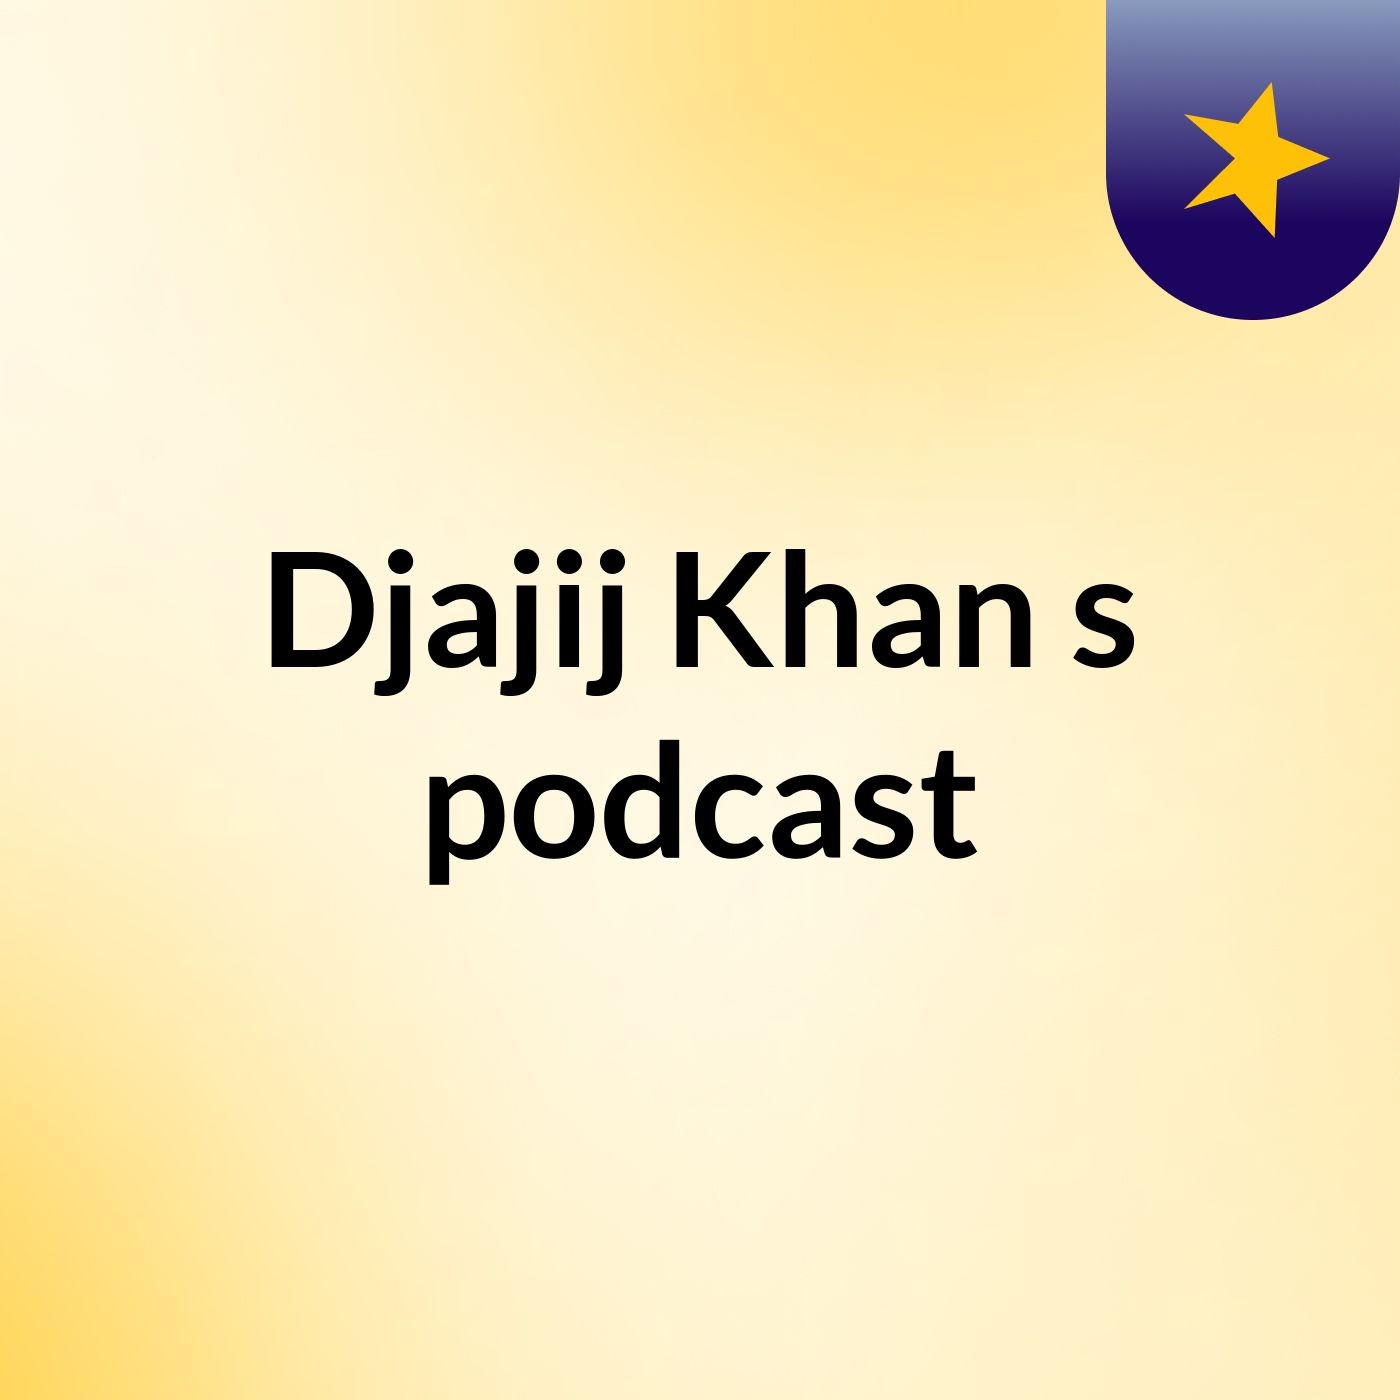 Djajij Khan's podcast